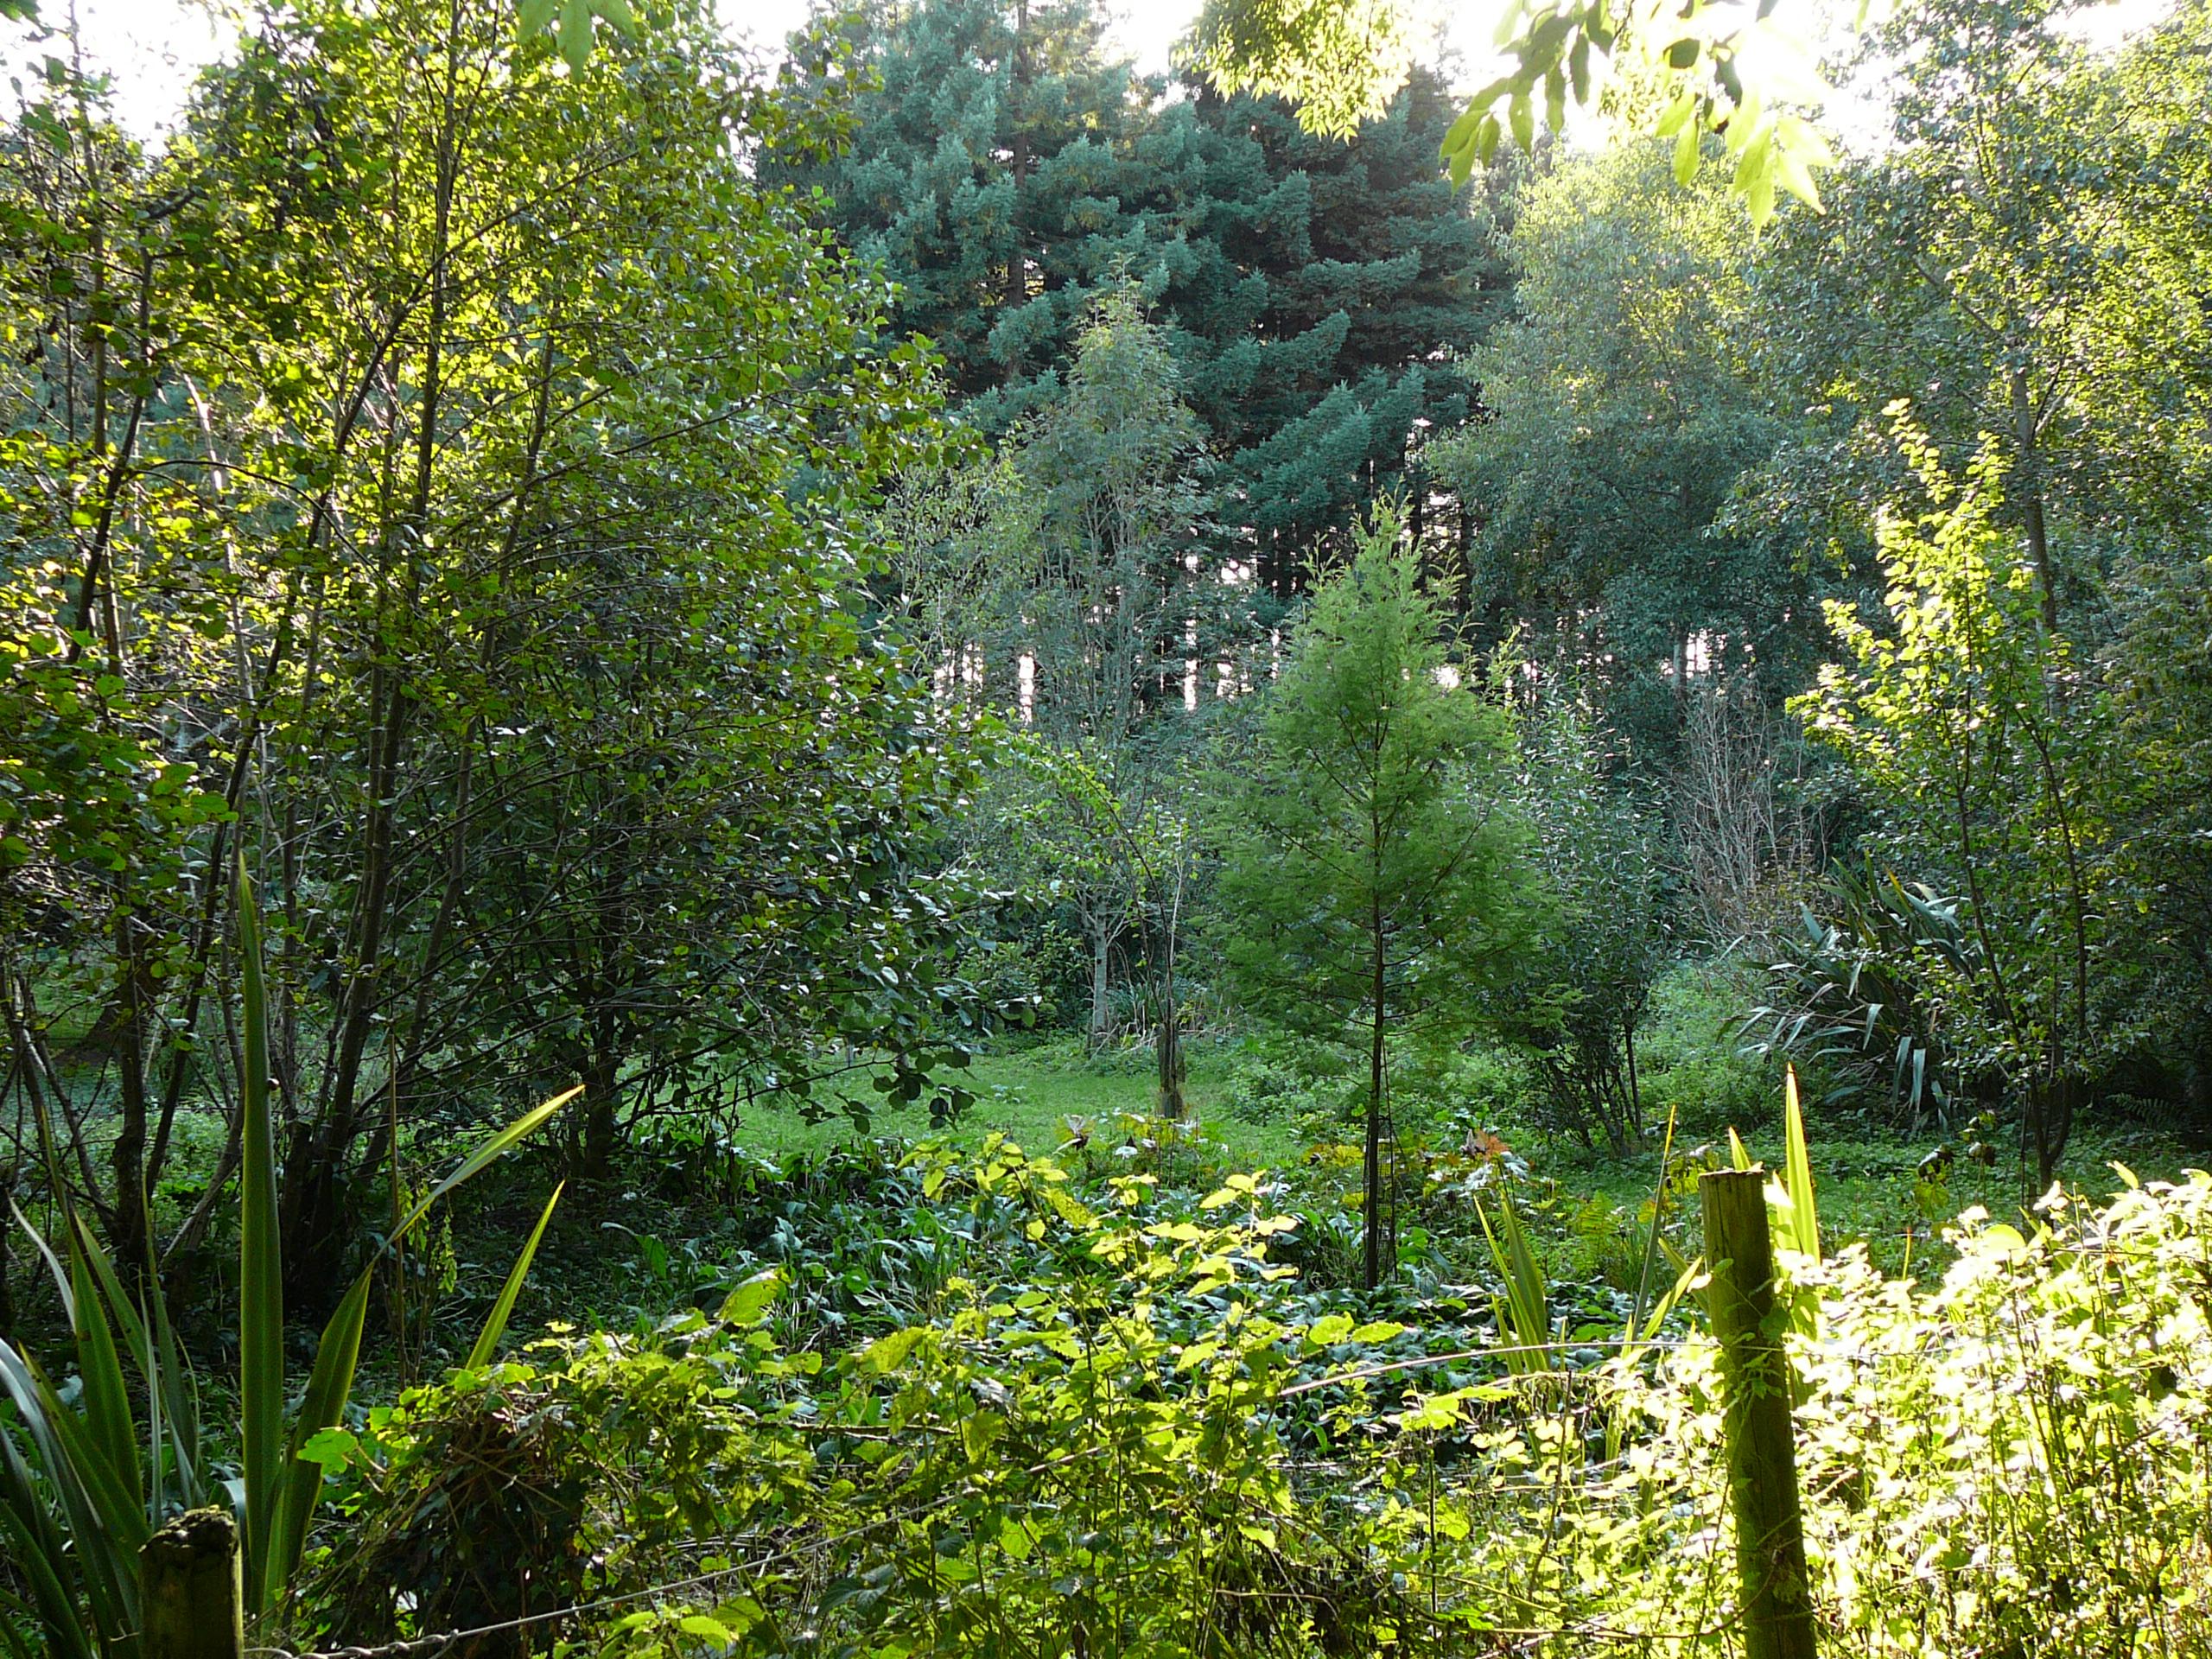 forest garden images picture photos album images download